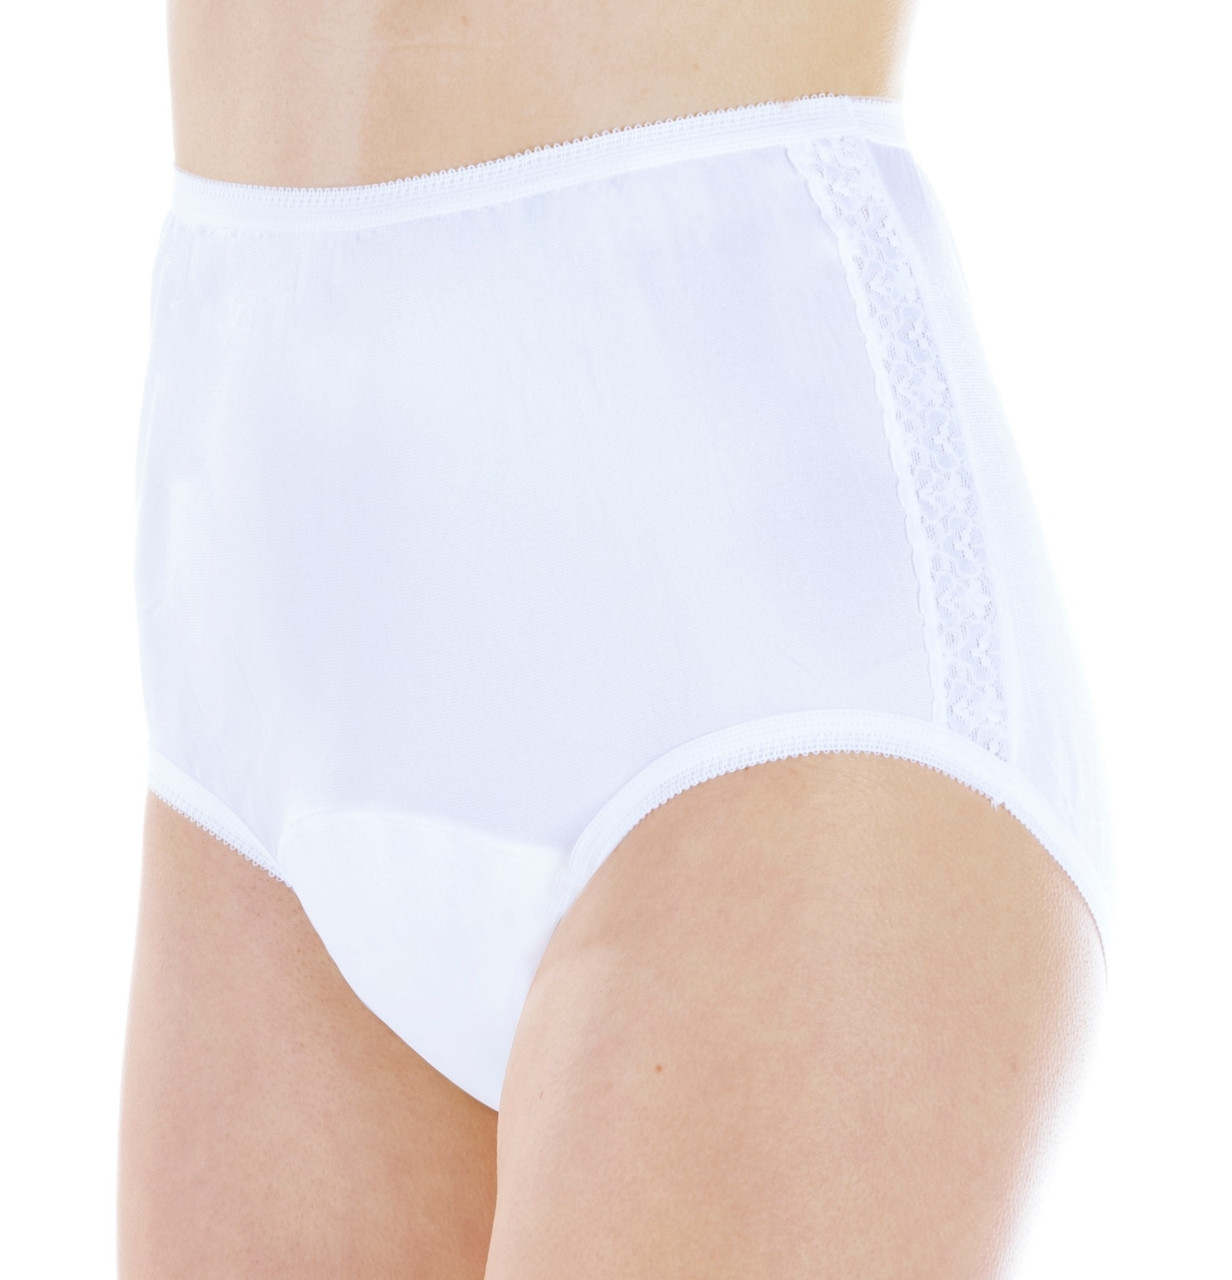 Wearever Women's Nylon & Lace Incontinence Panty